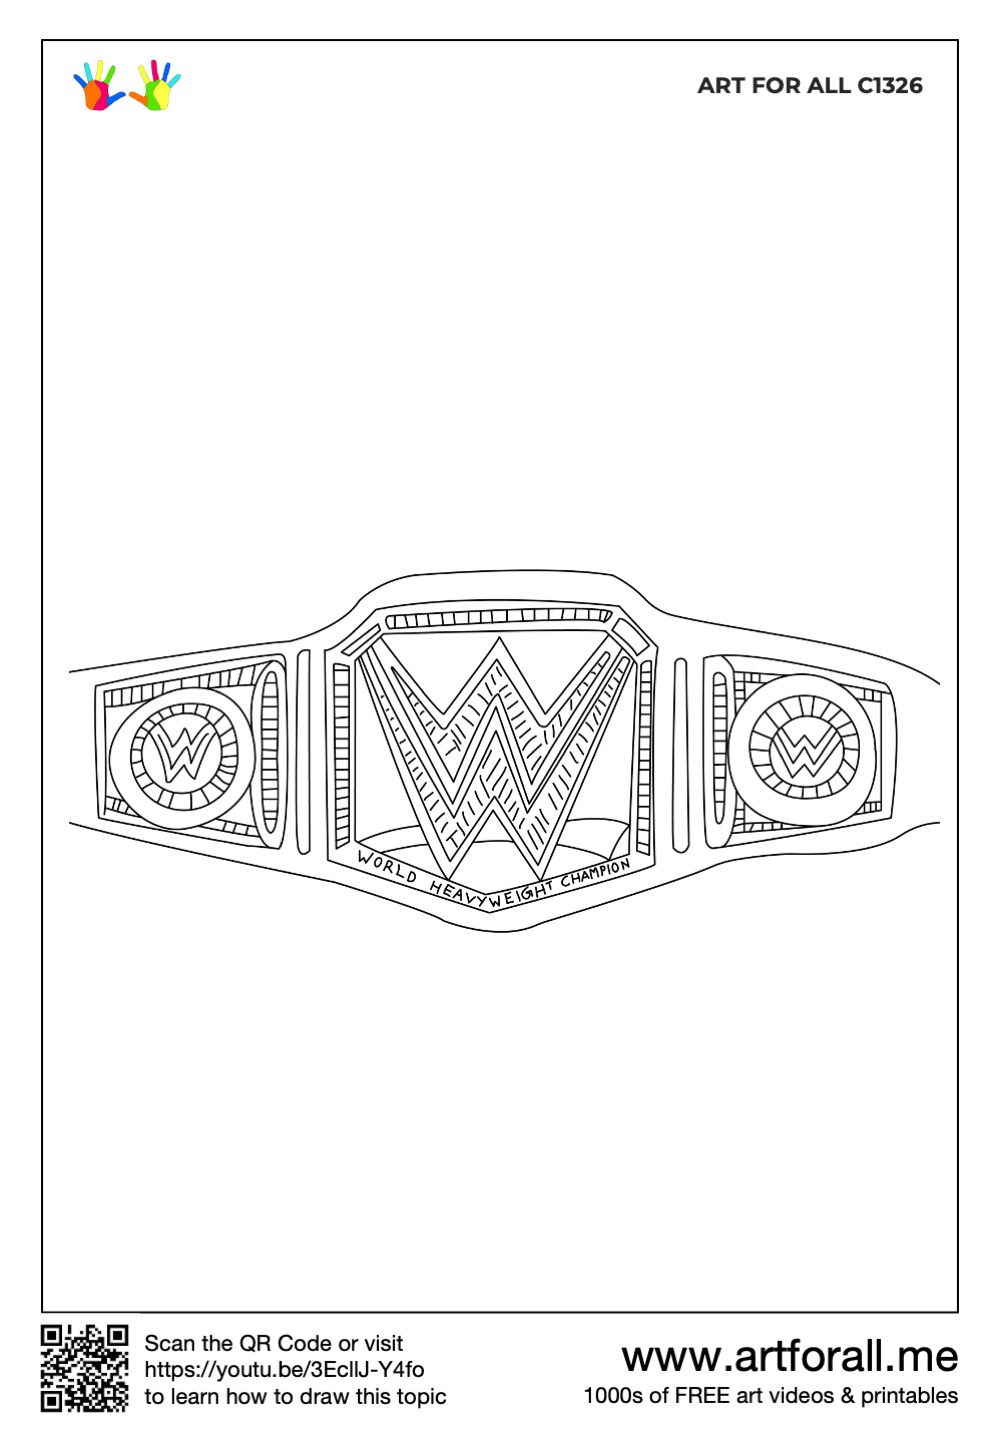 How to draw wwe championship belt